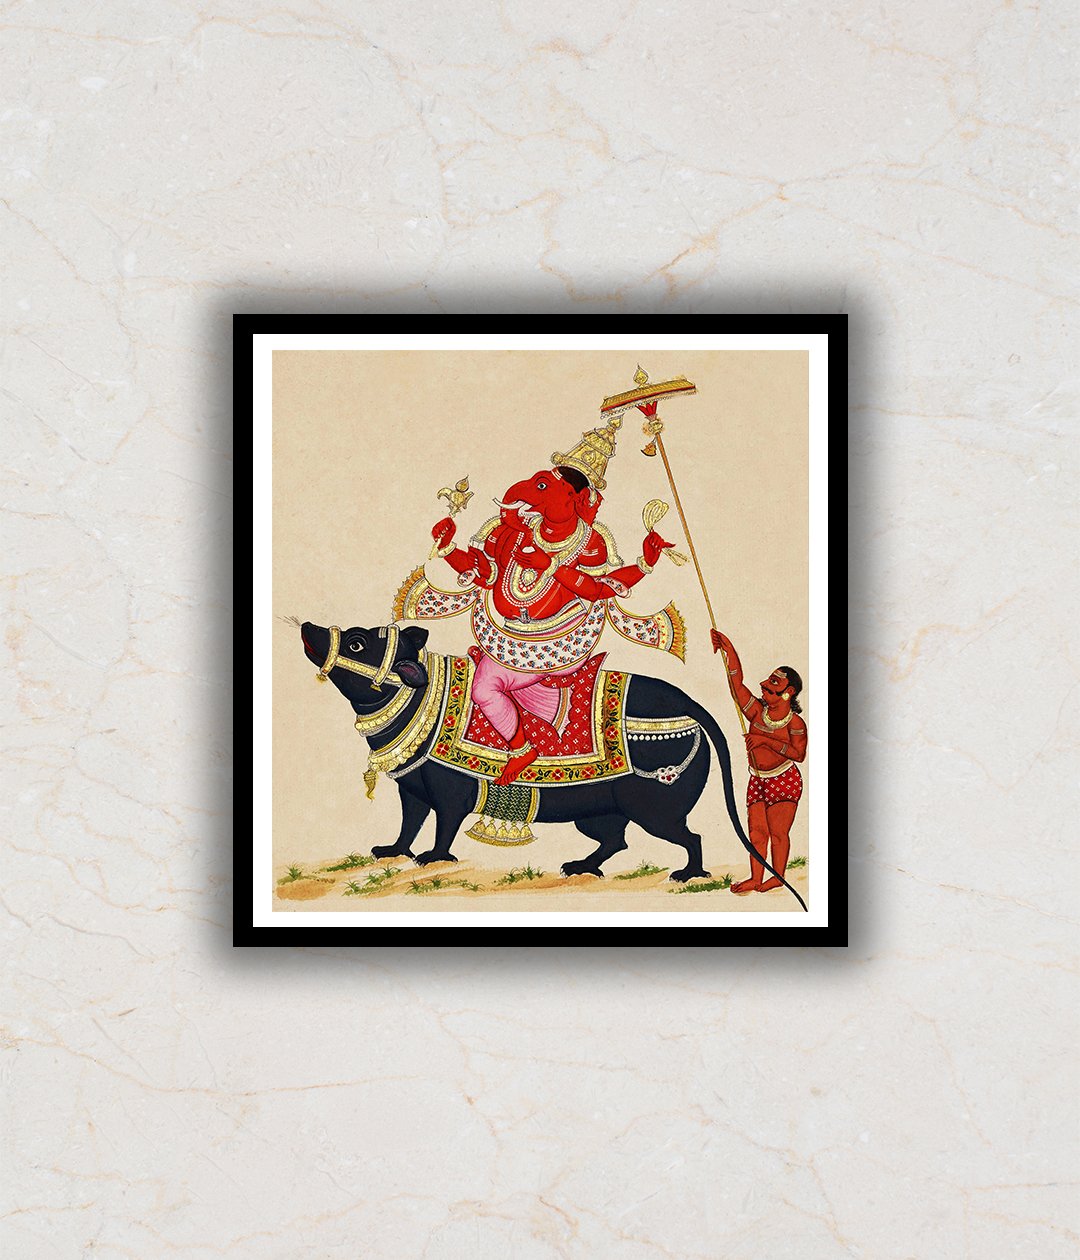 Thajavur Ganesh/Ganpati Art Painting For Home Wall Art Decor ...